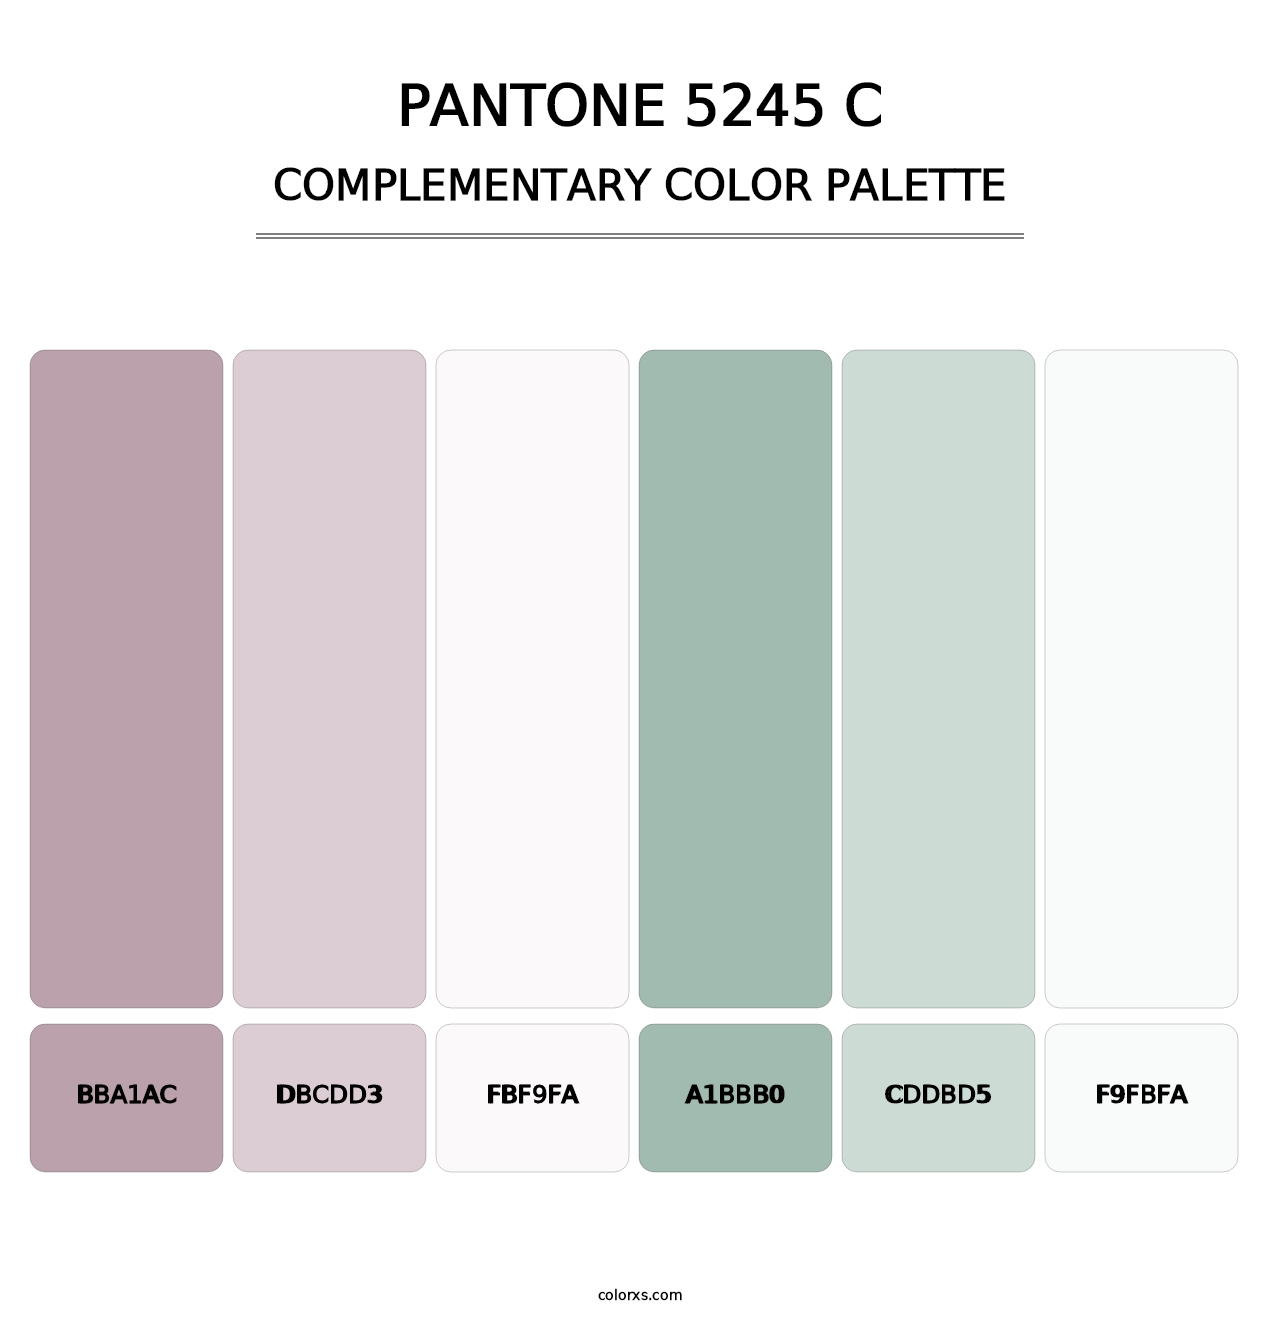 PANTONE 5245 C - Complementary Color Palette